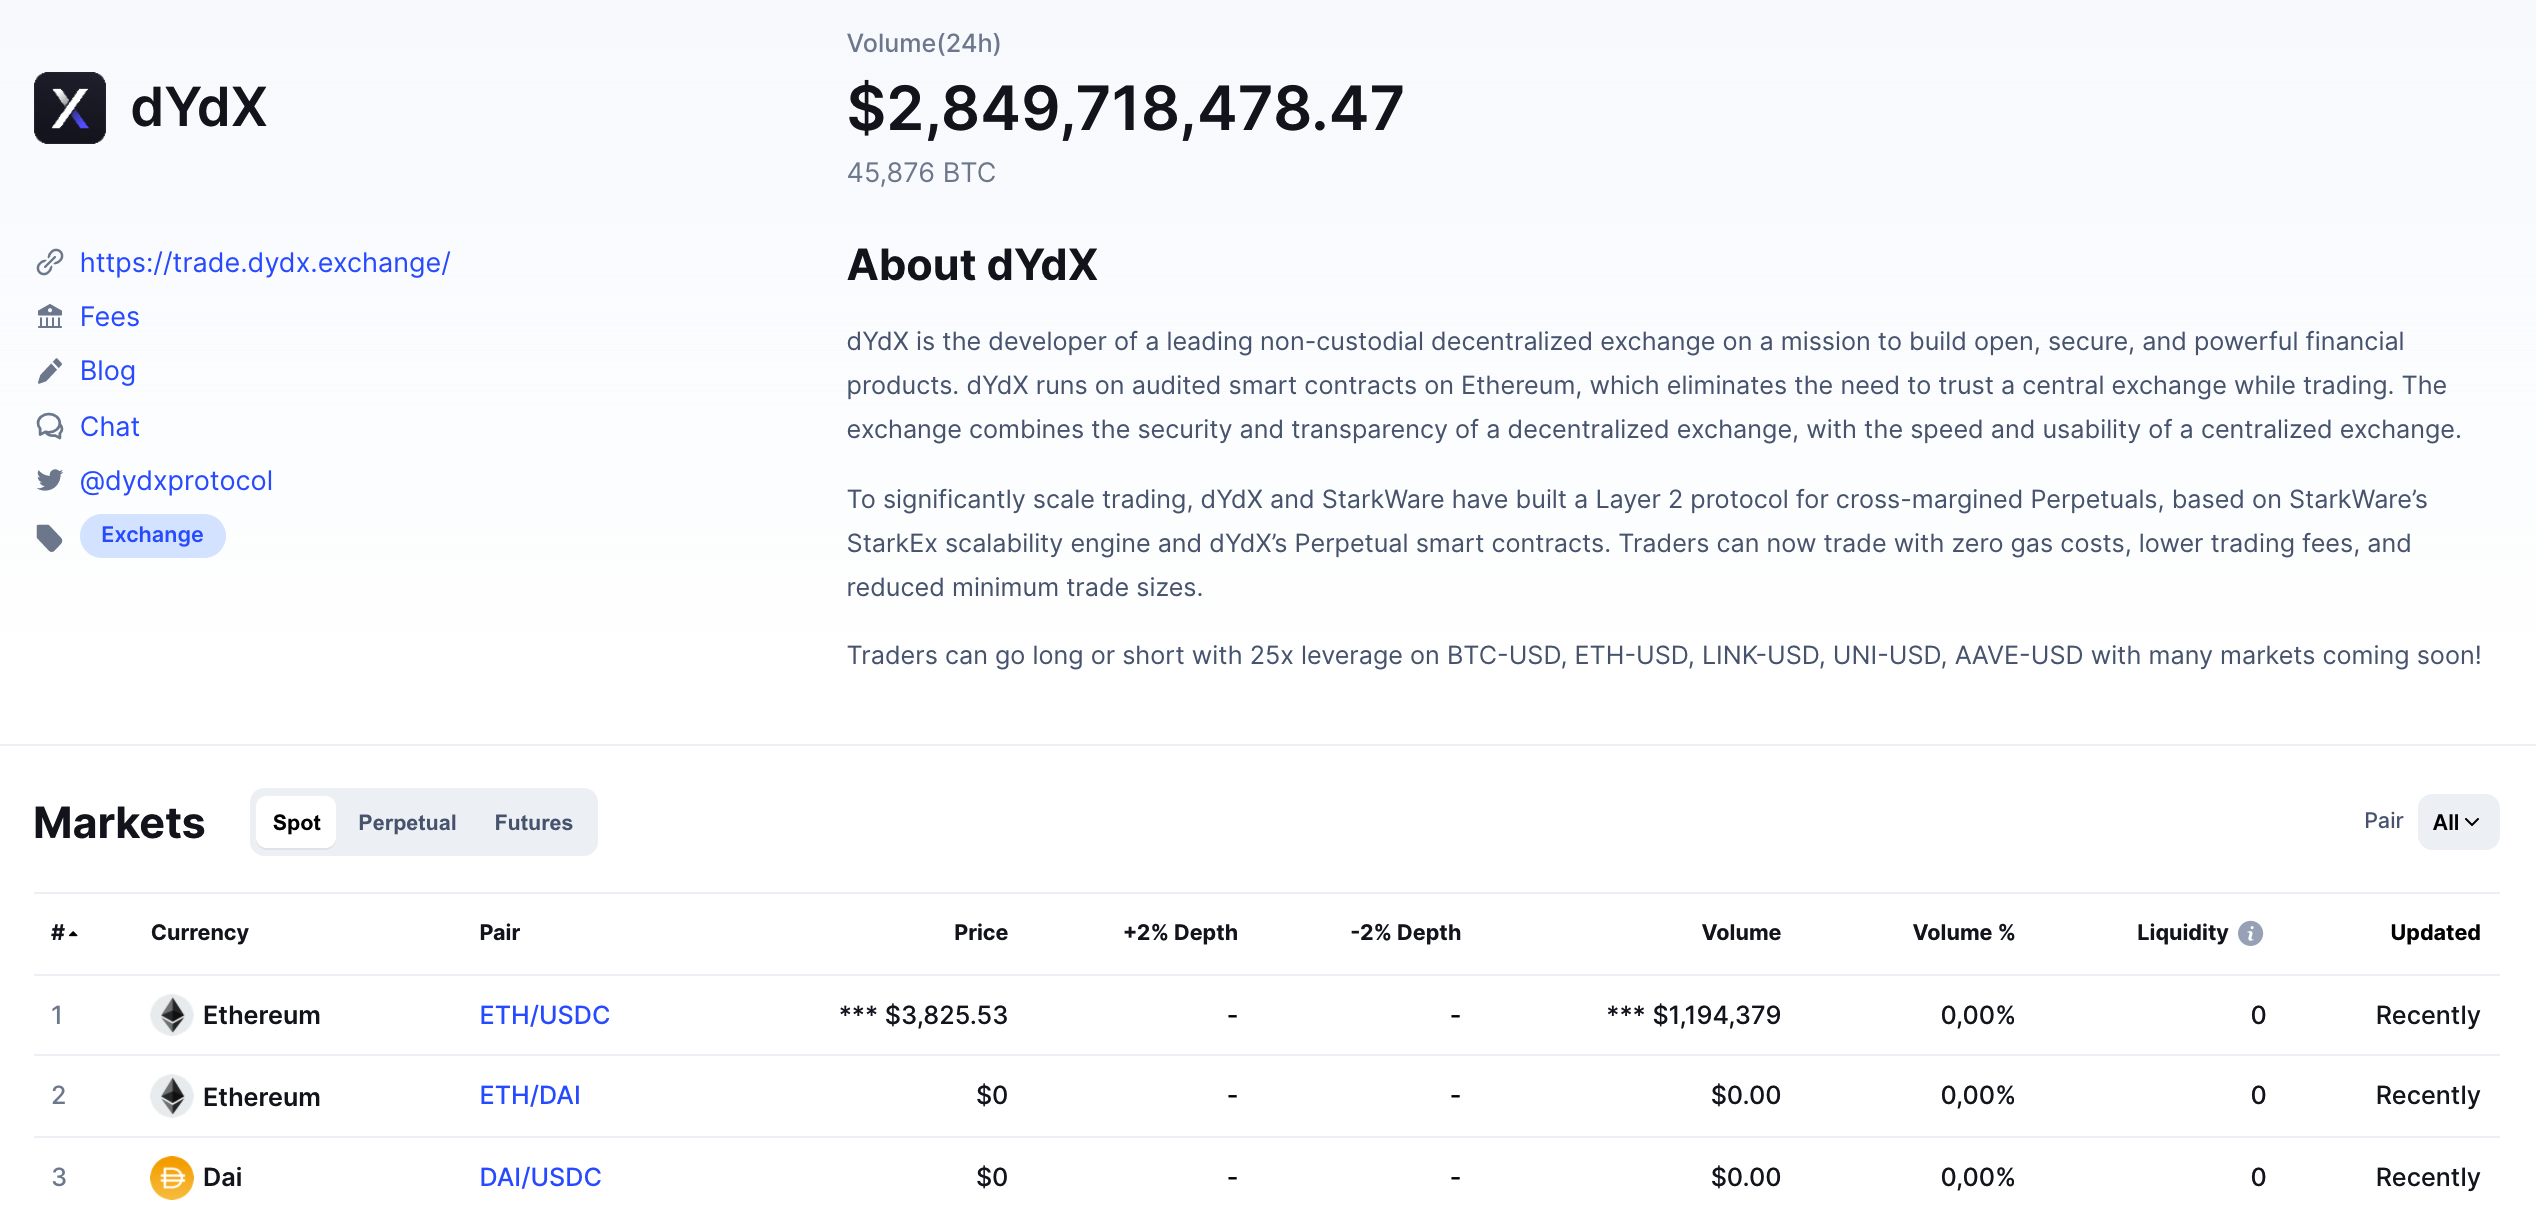 dYdX 记录的每日交易量超过 100 亿美元，翻转 Uniswap 和 Coinbase